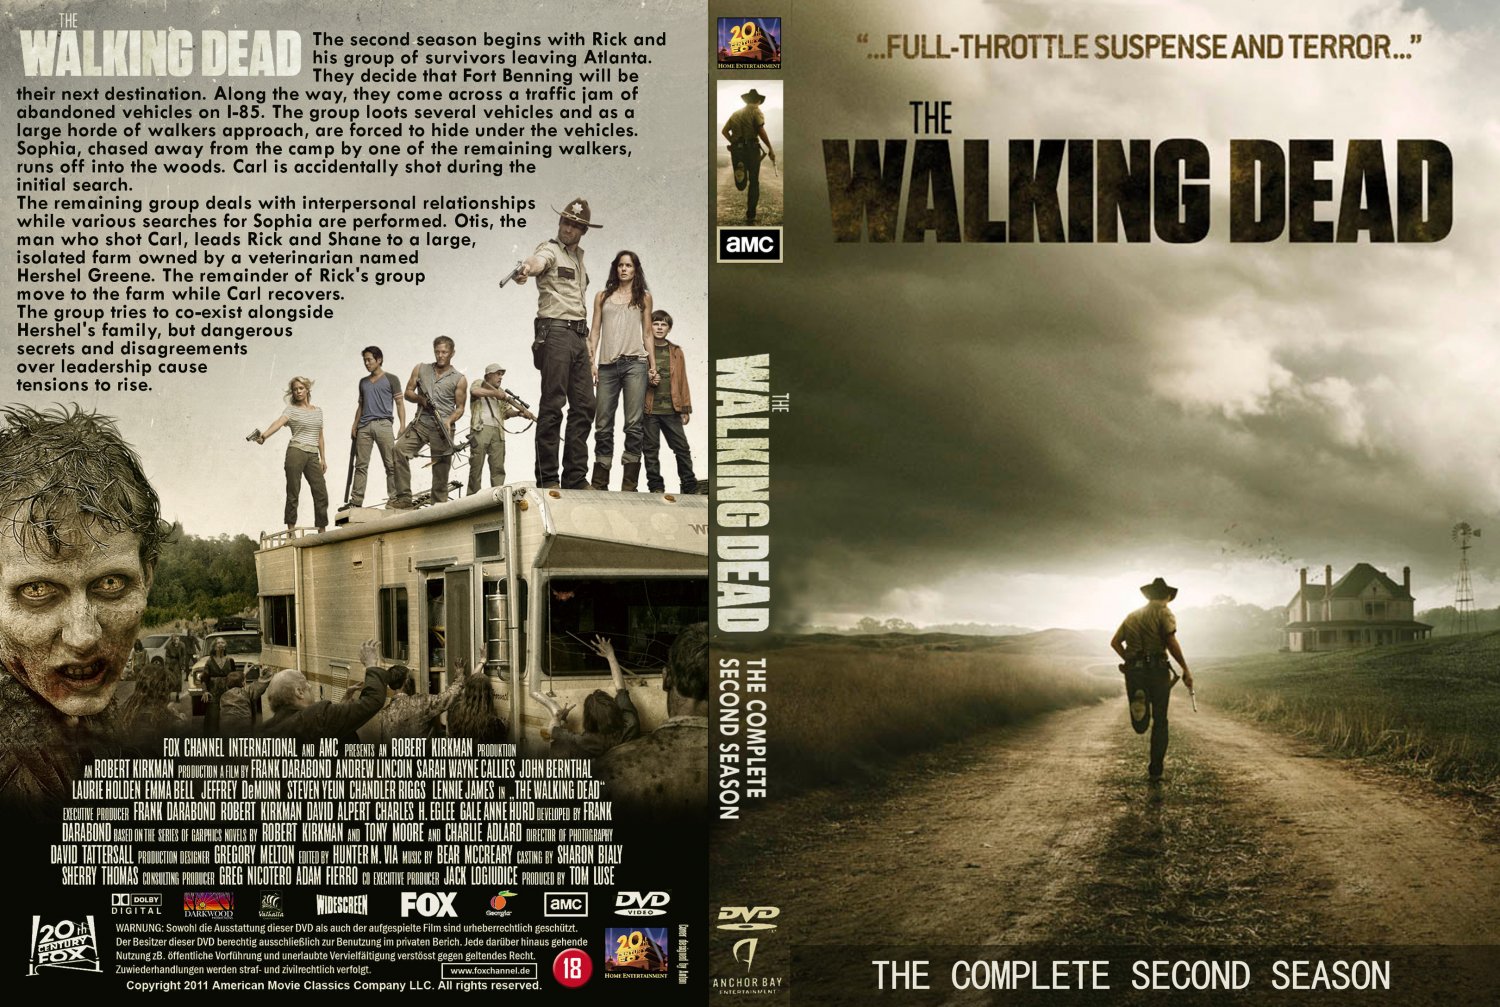 season 2 custom1 the walking dead season 2 custom1 date 10 18 2012